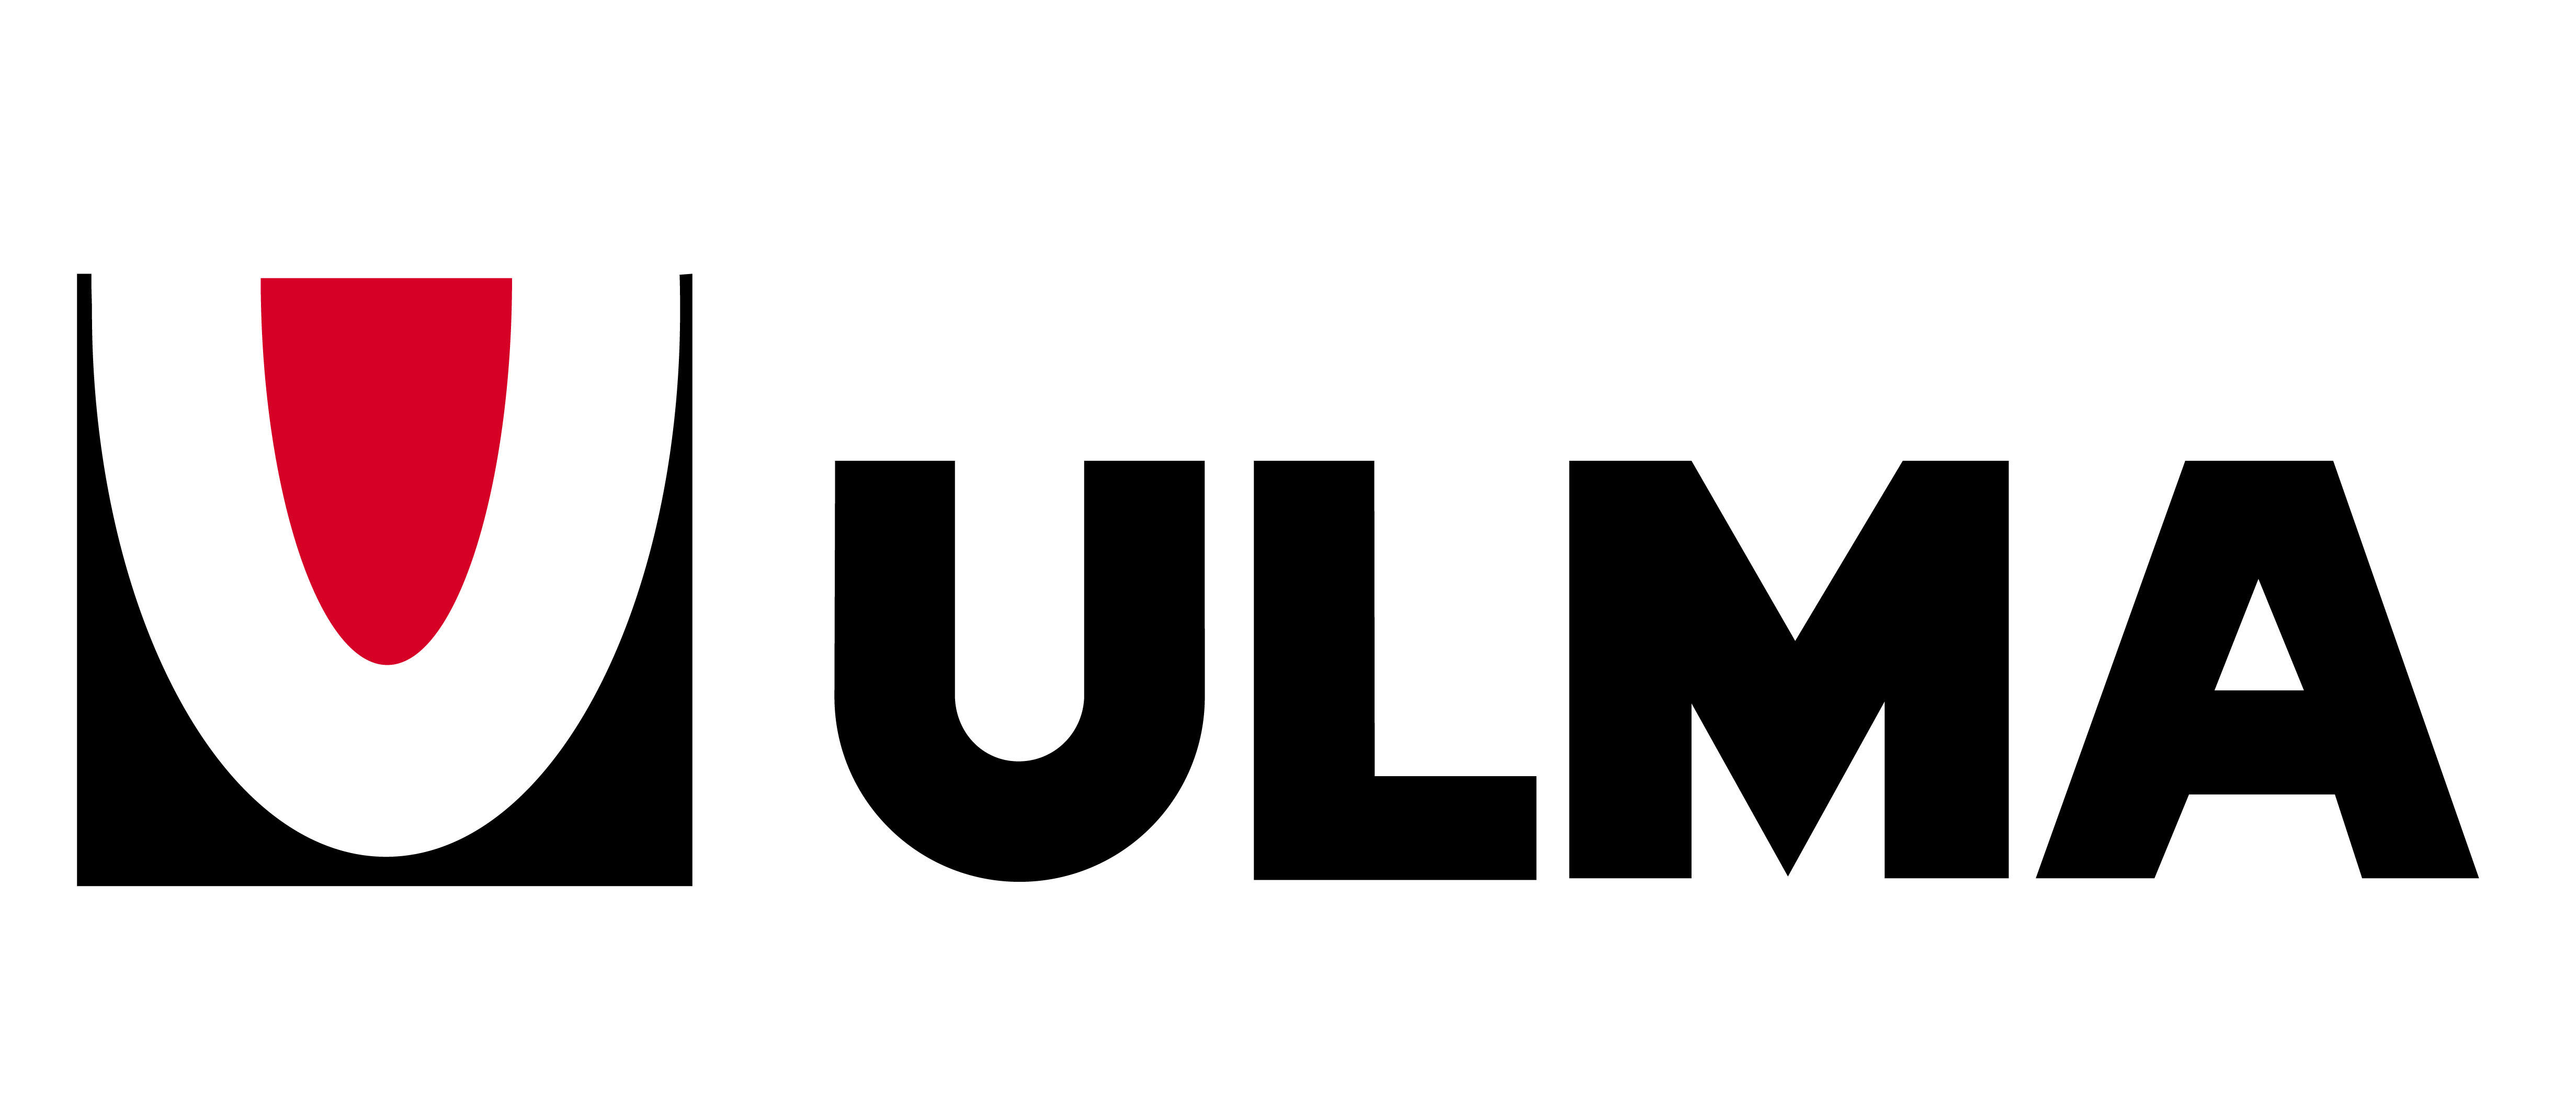 ULMA Group logo